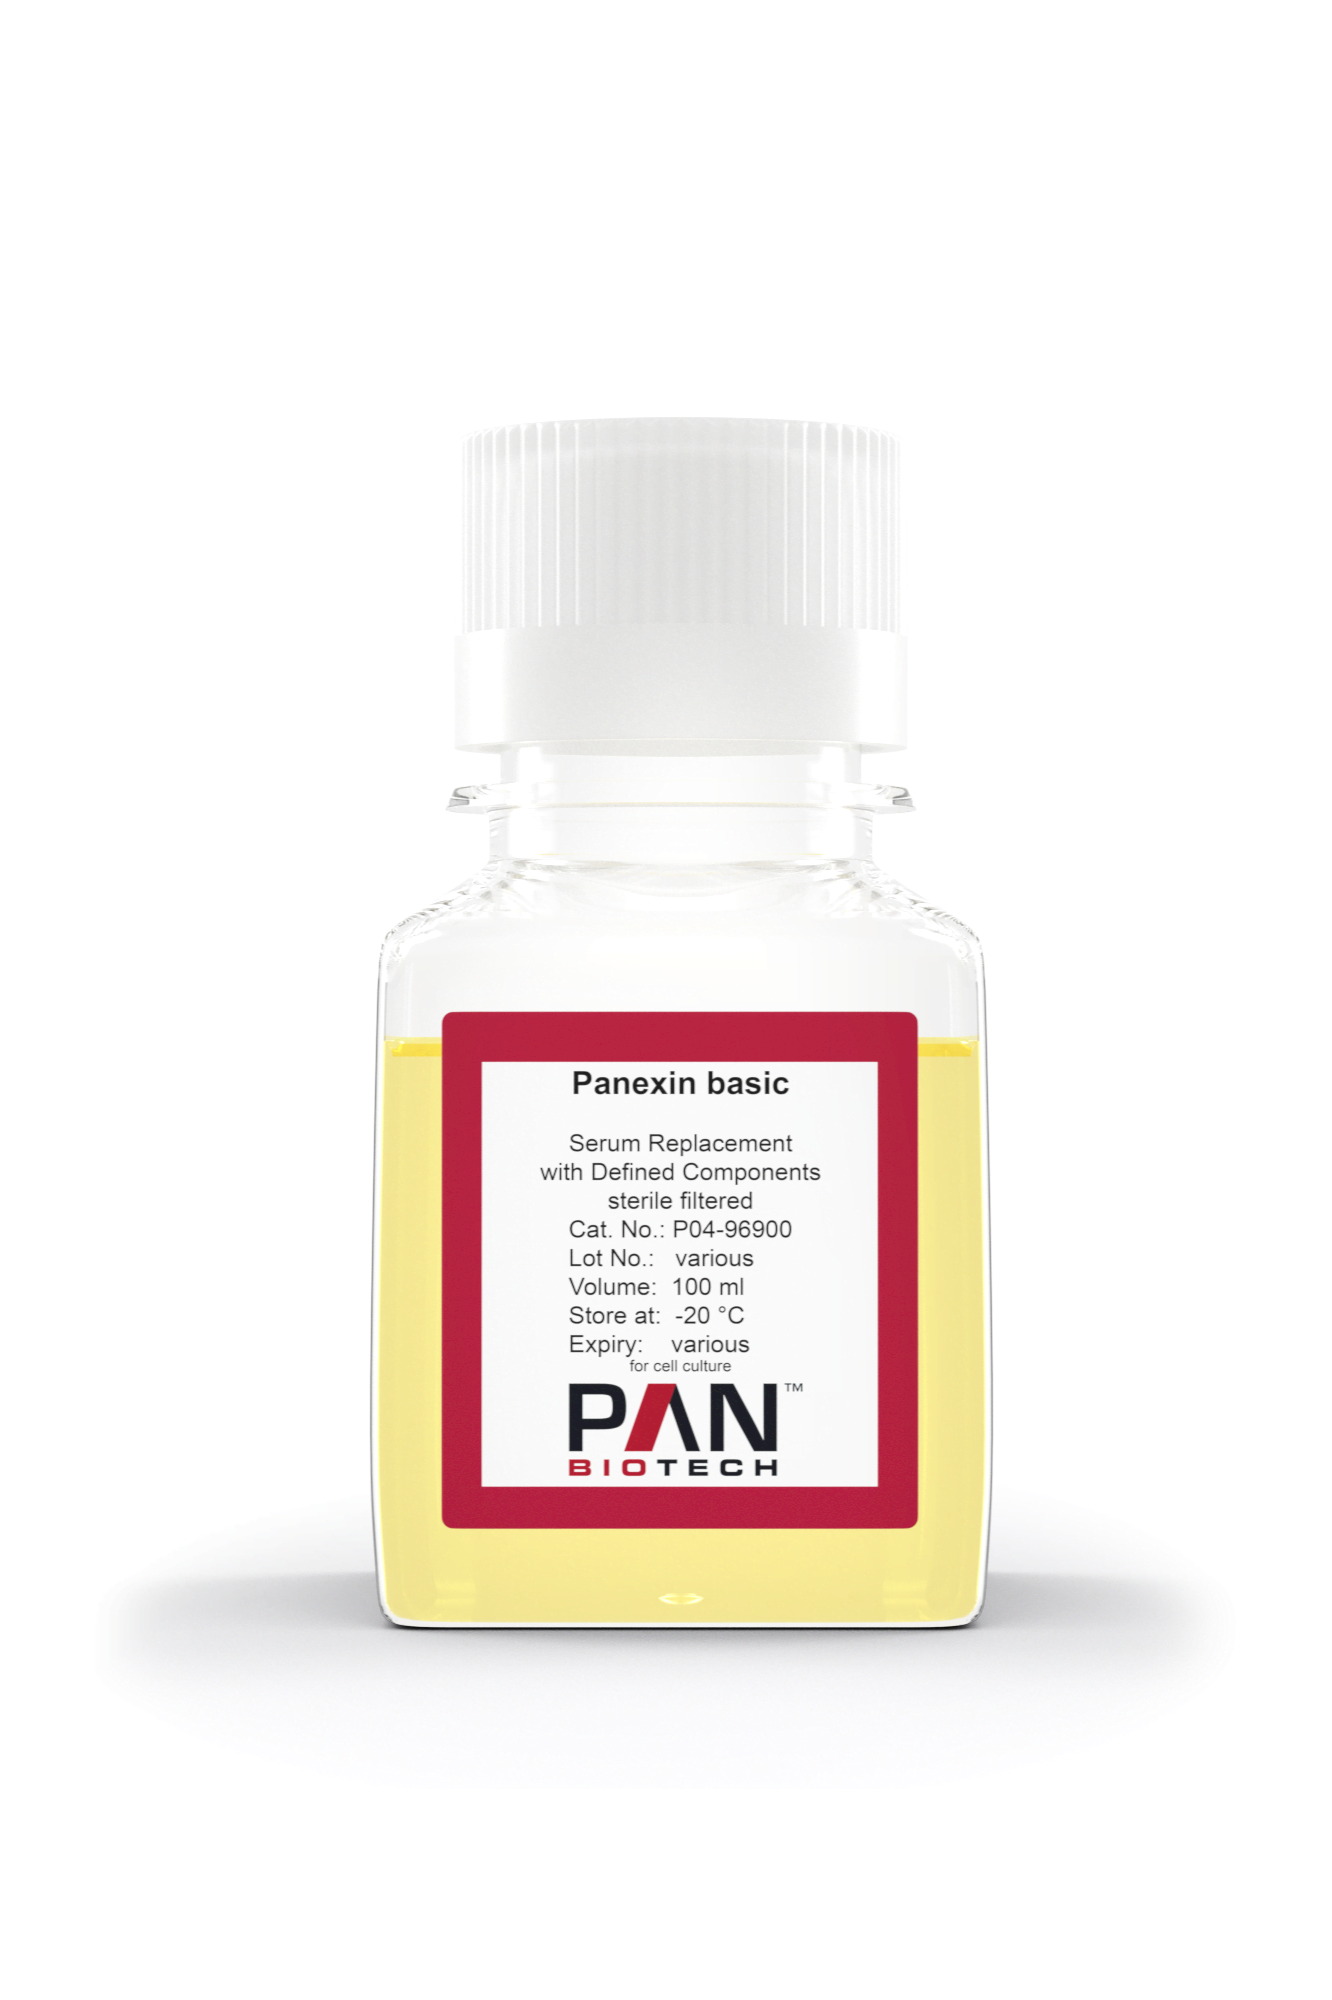 Panexin basic Serum Replacement